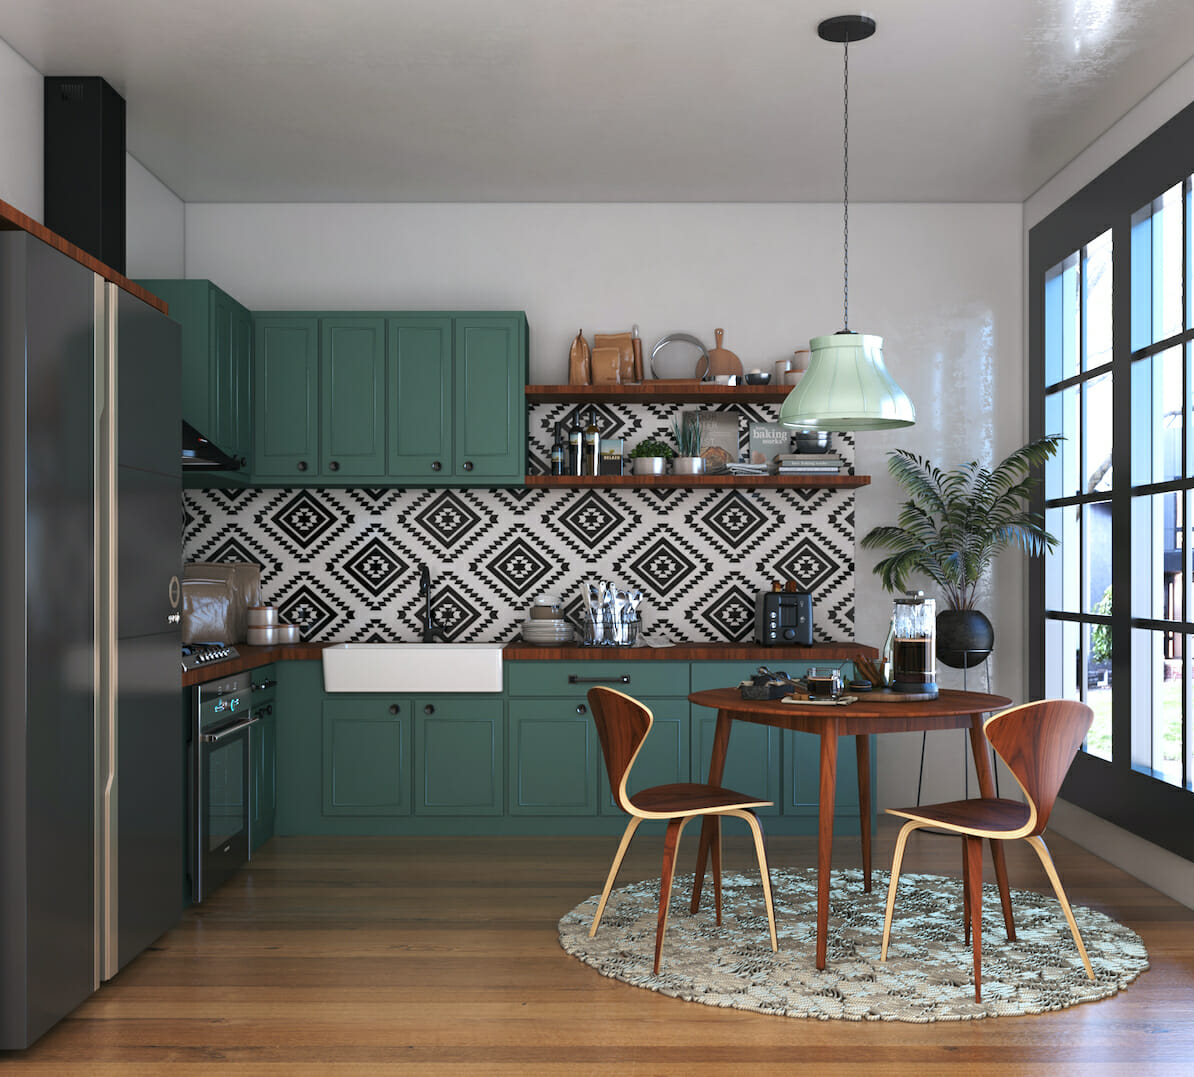 https://www.decorilla.com/online-decorating/wp-content/uploads/2020/01/Kitchen-design-ideas-statement-tile-backsplash-.jpeg